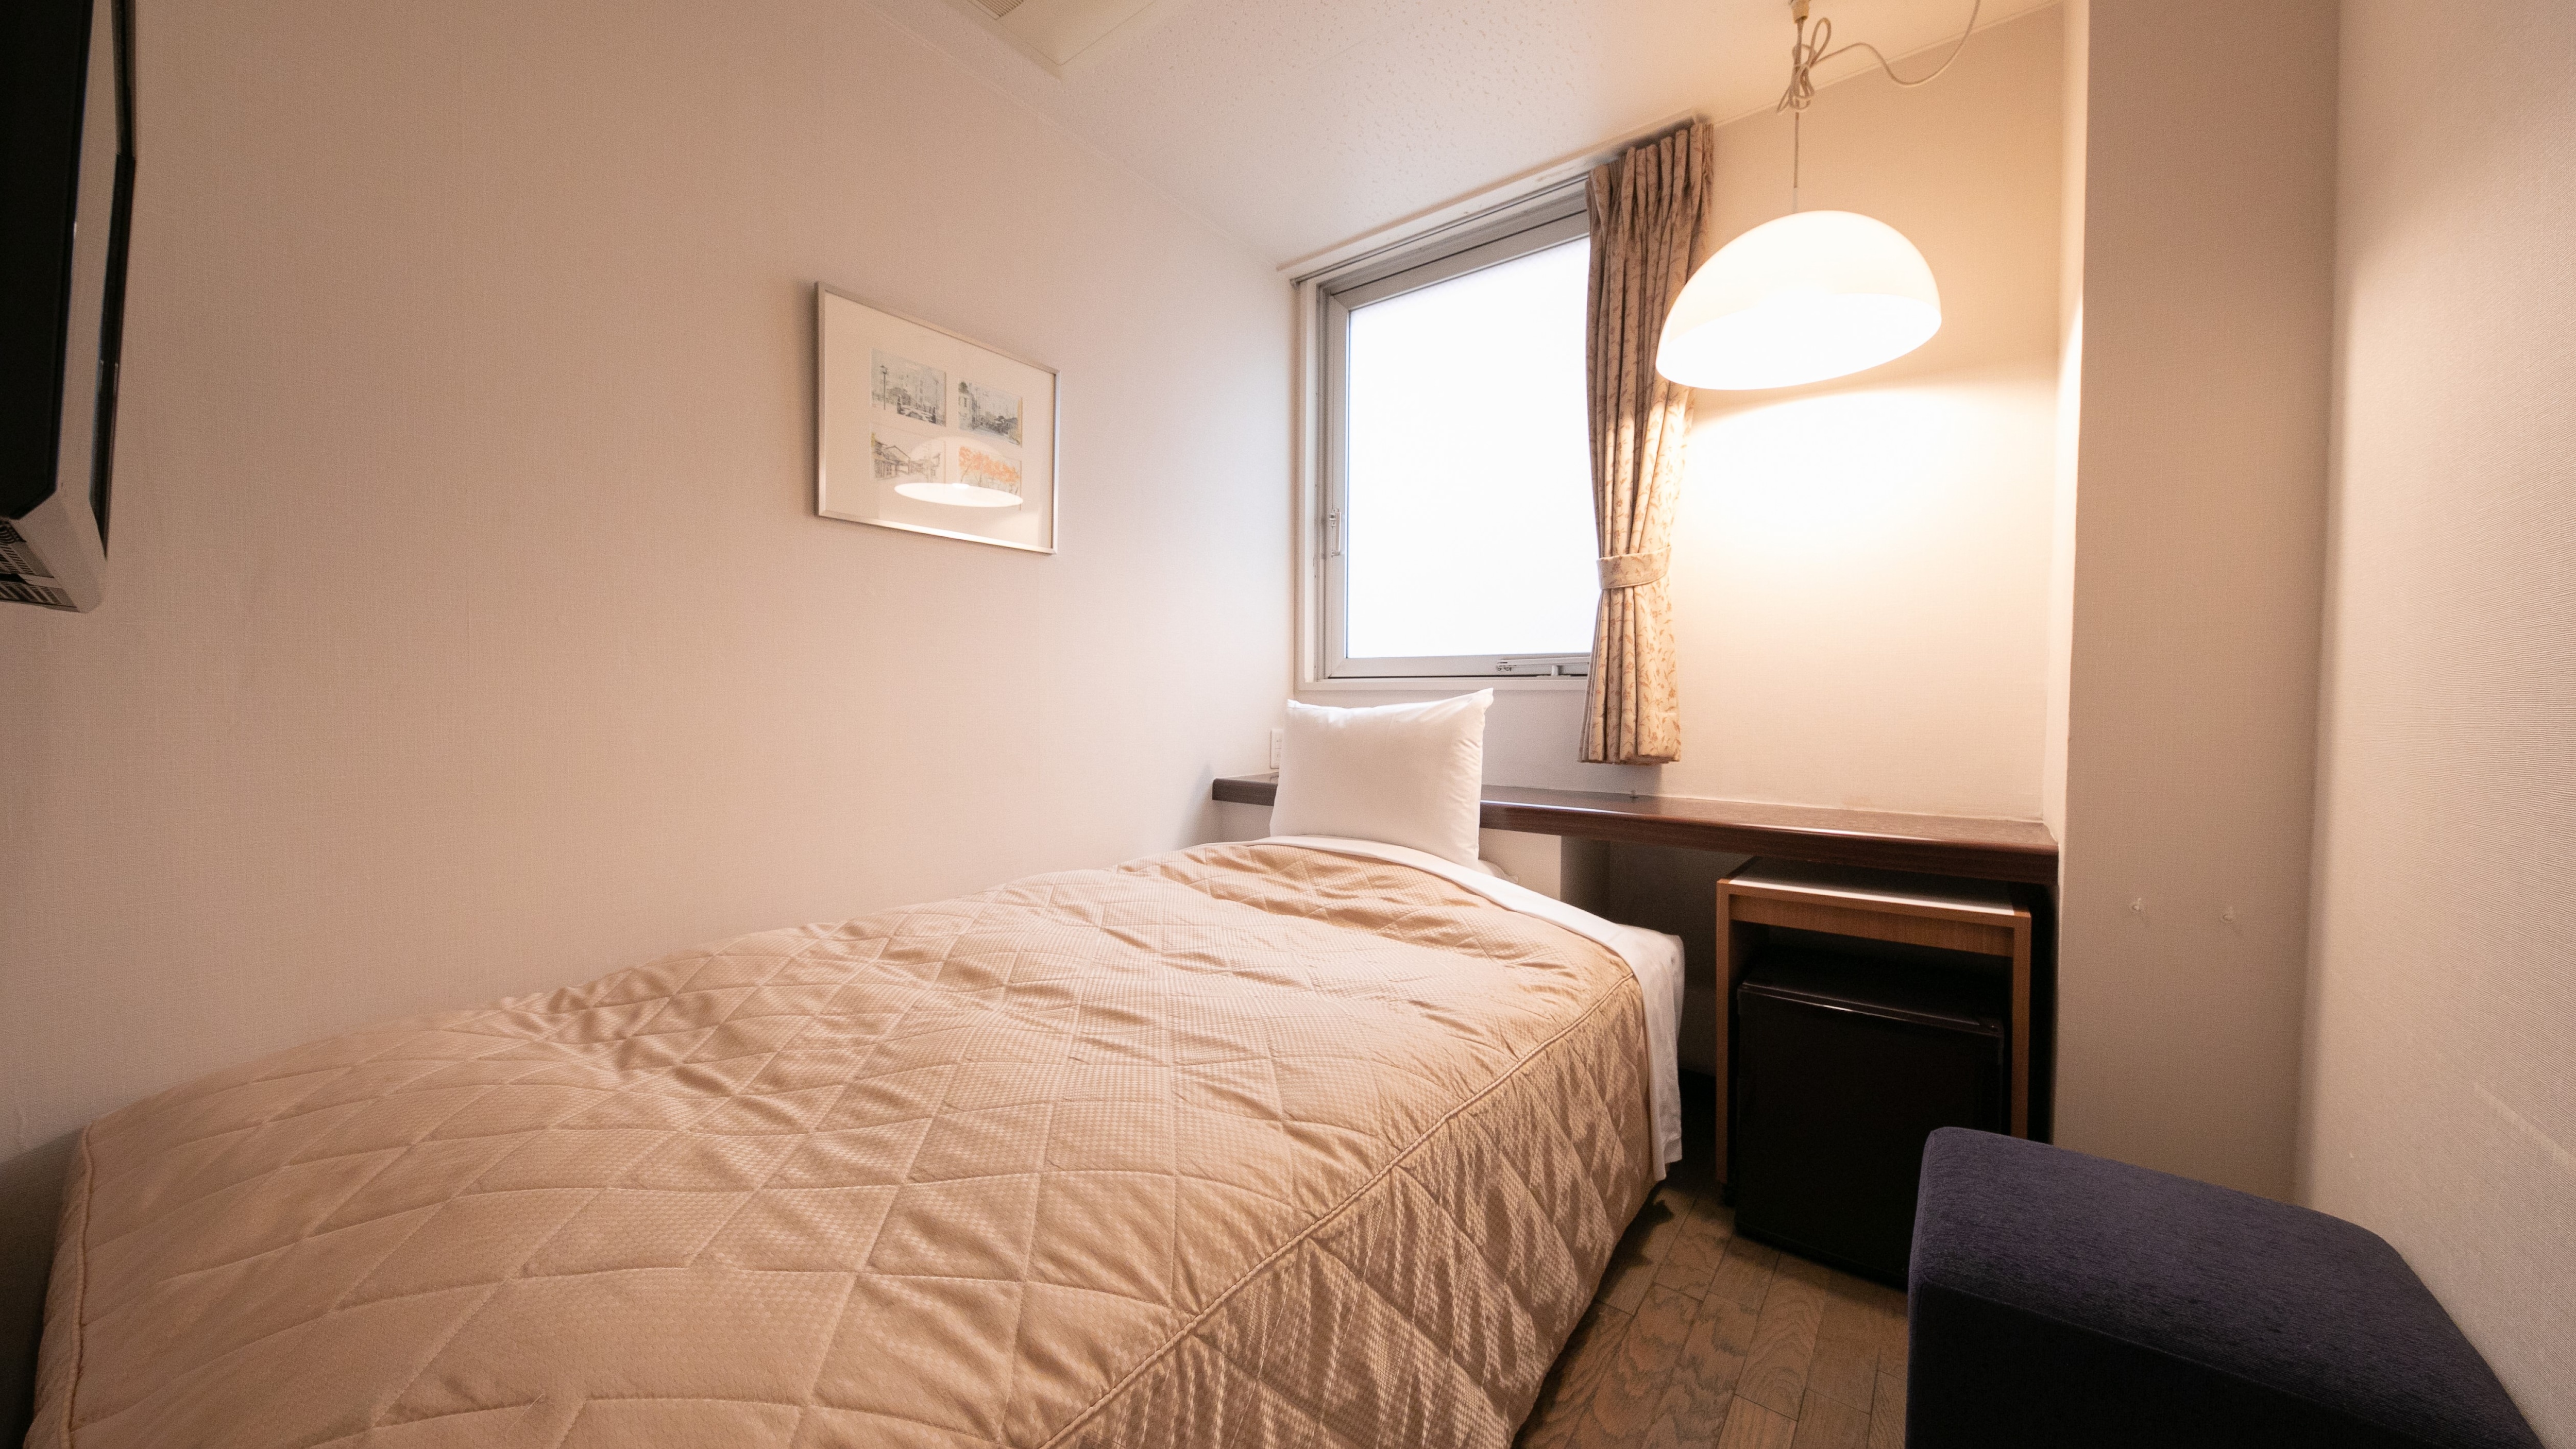 [Single] Room with 8 square meters / bed width 100 cm. The floor has warm wood flooring.